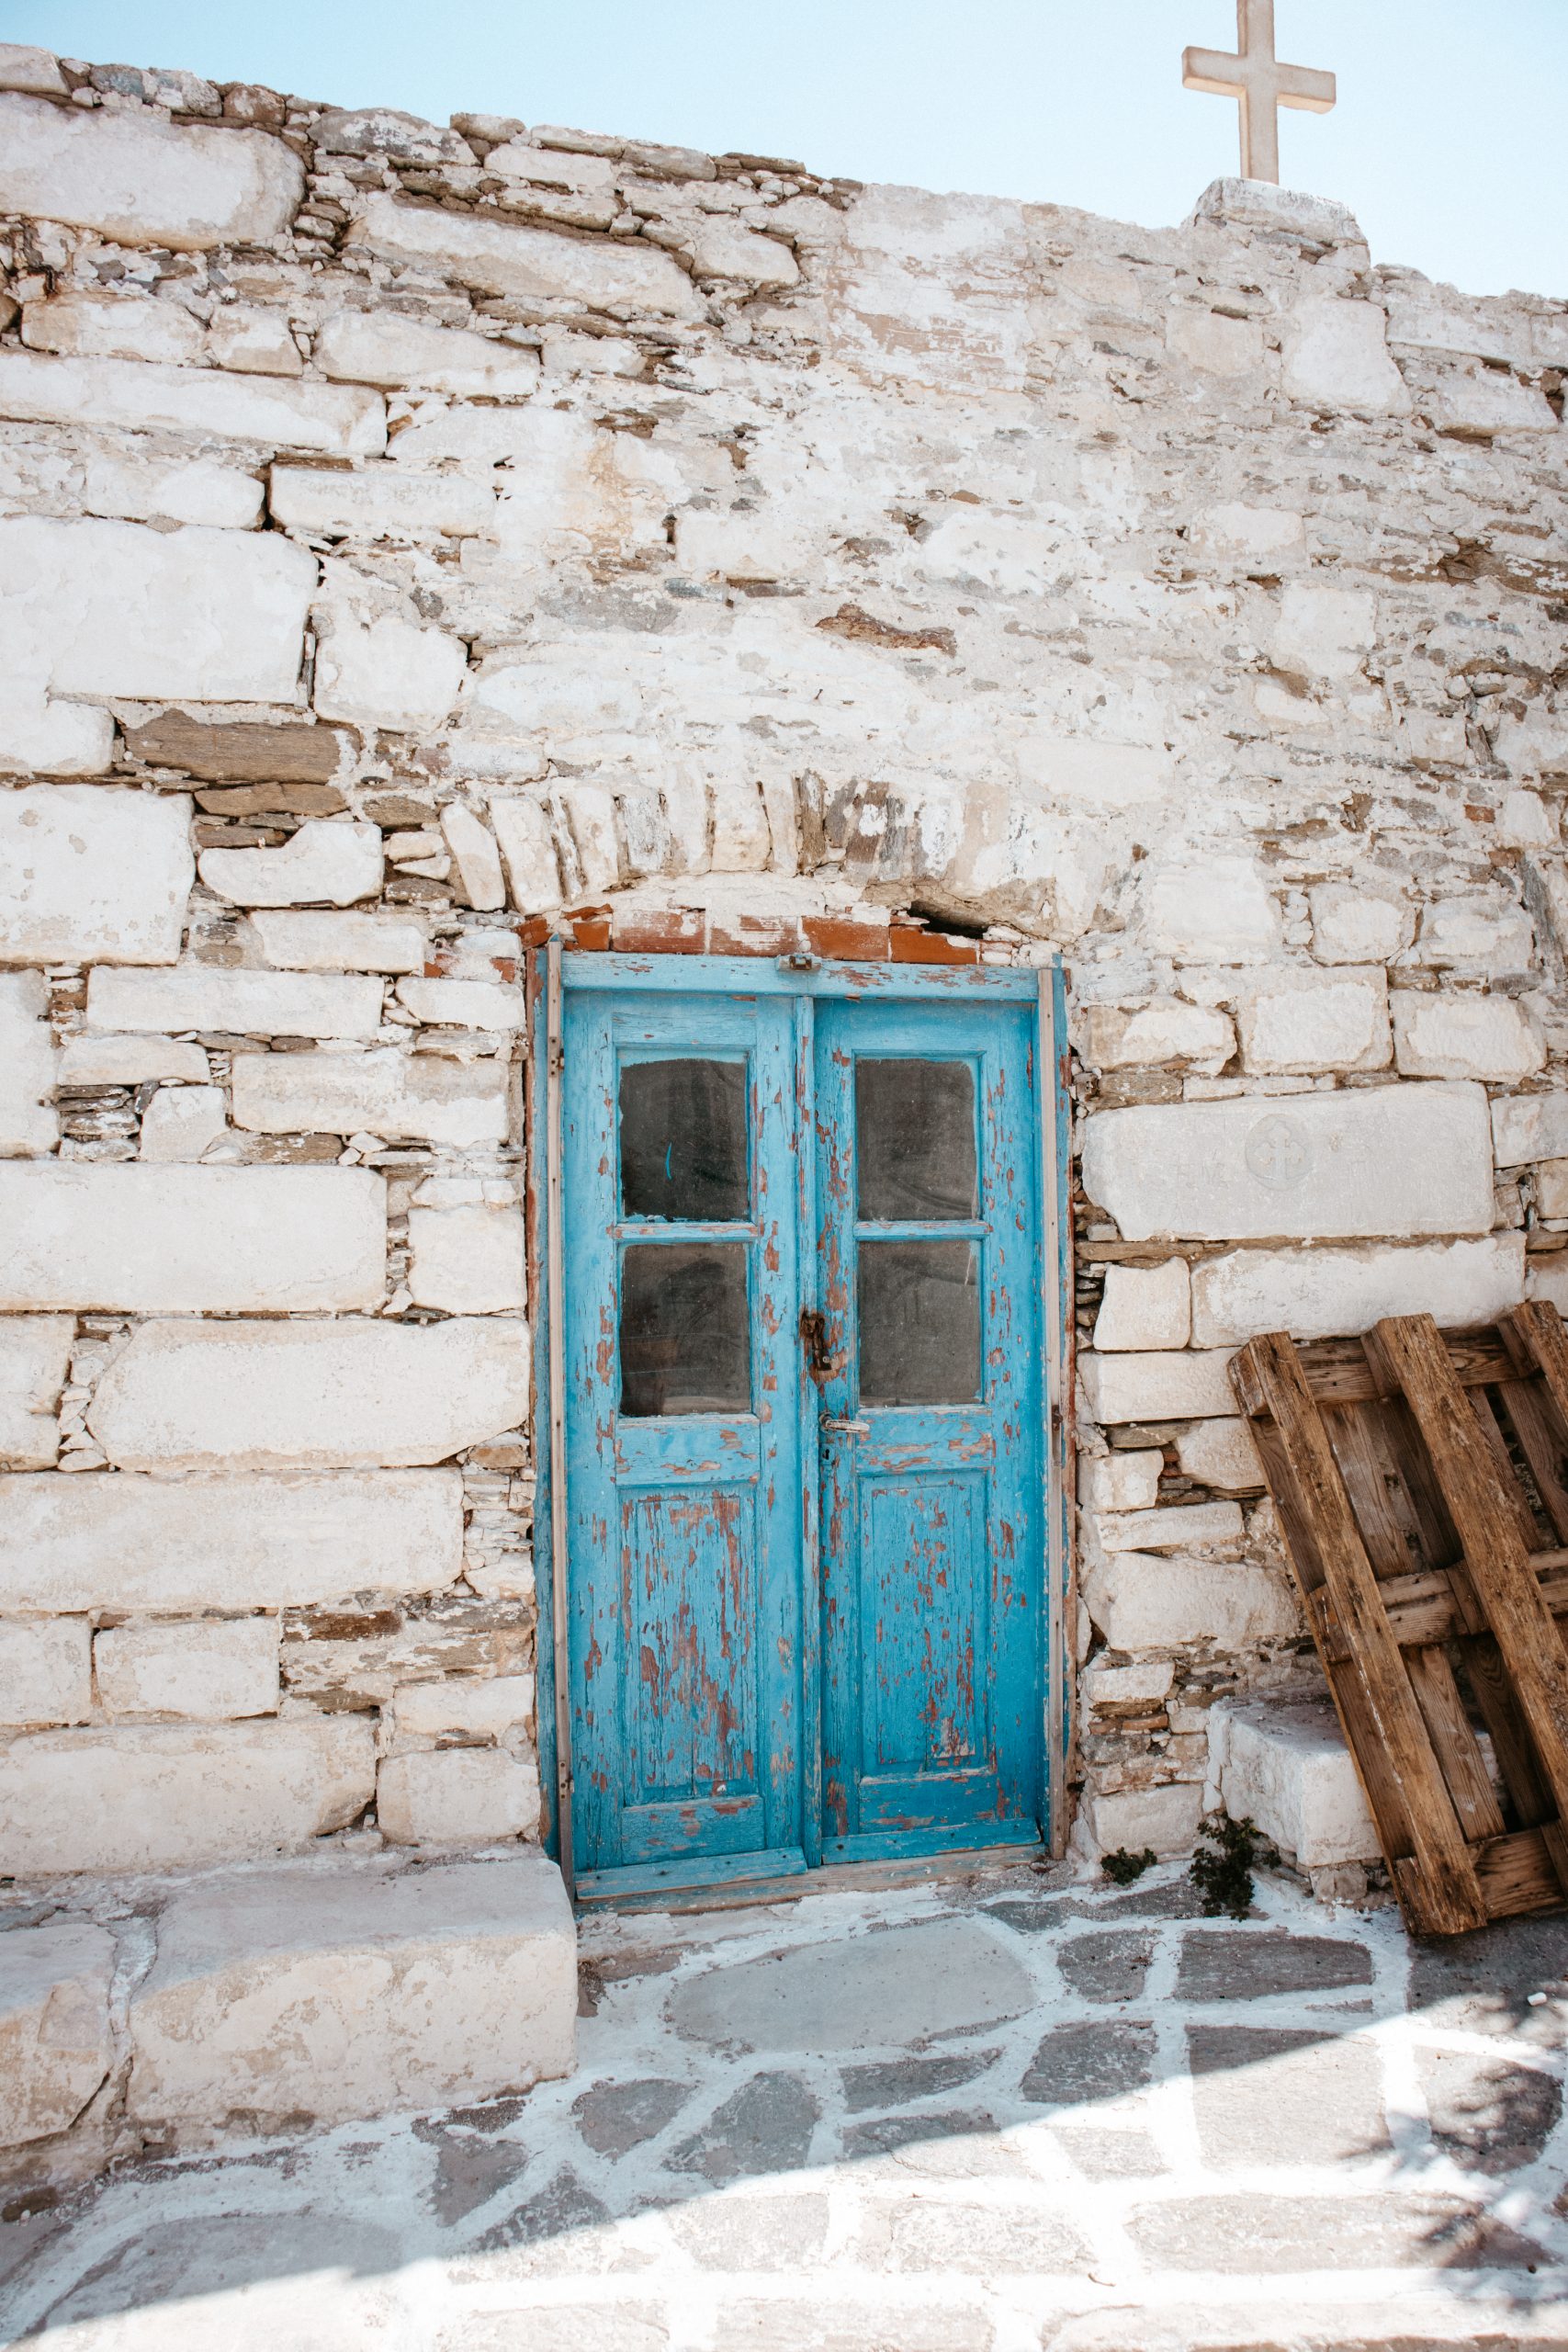 An old building with a blue door in Parakia, Paros.